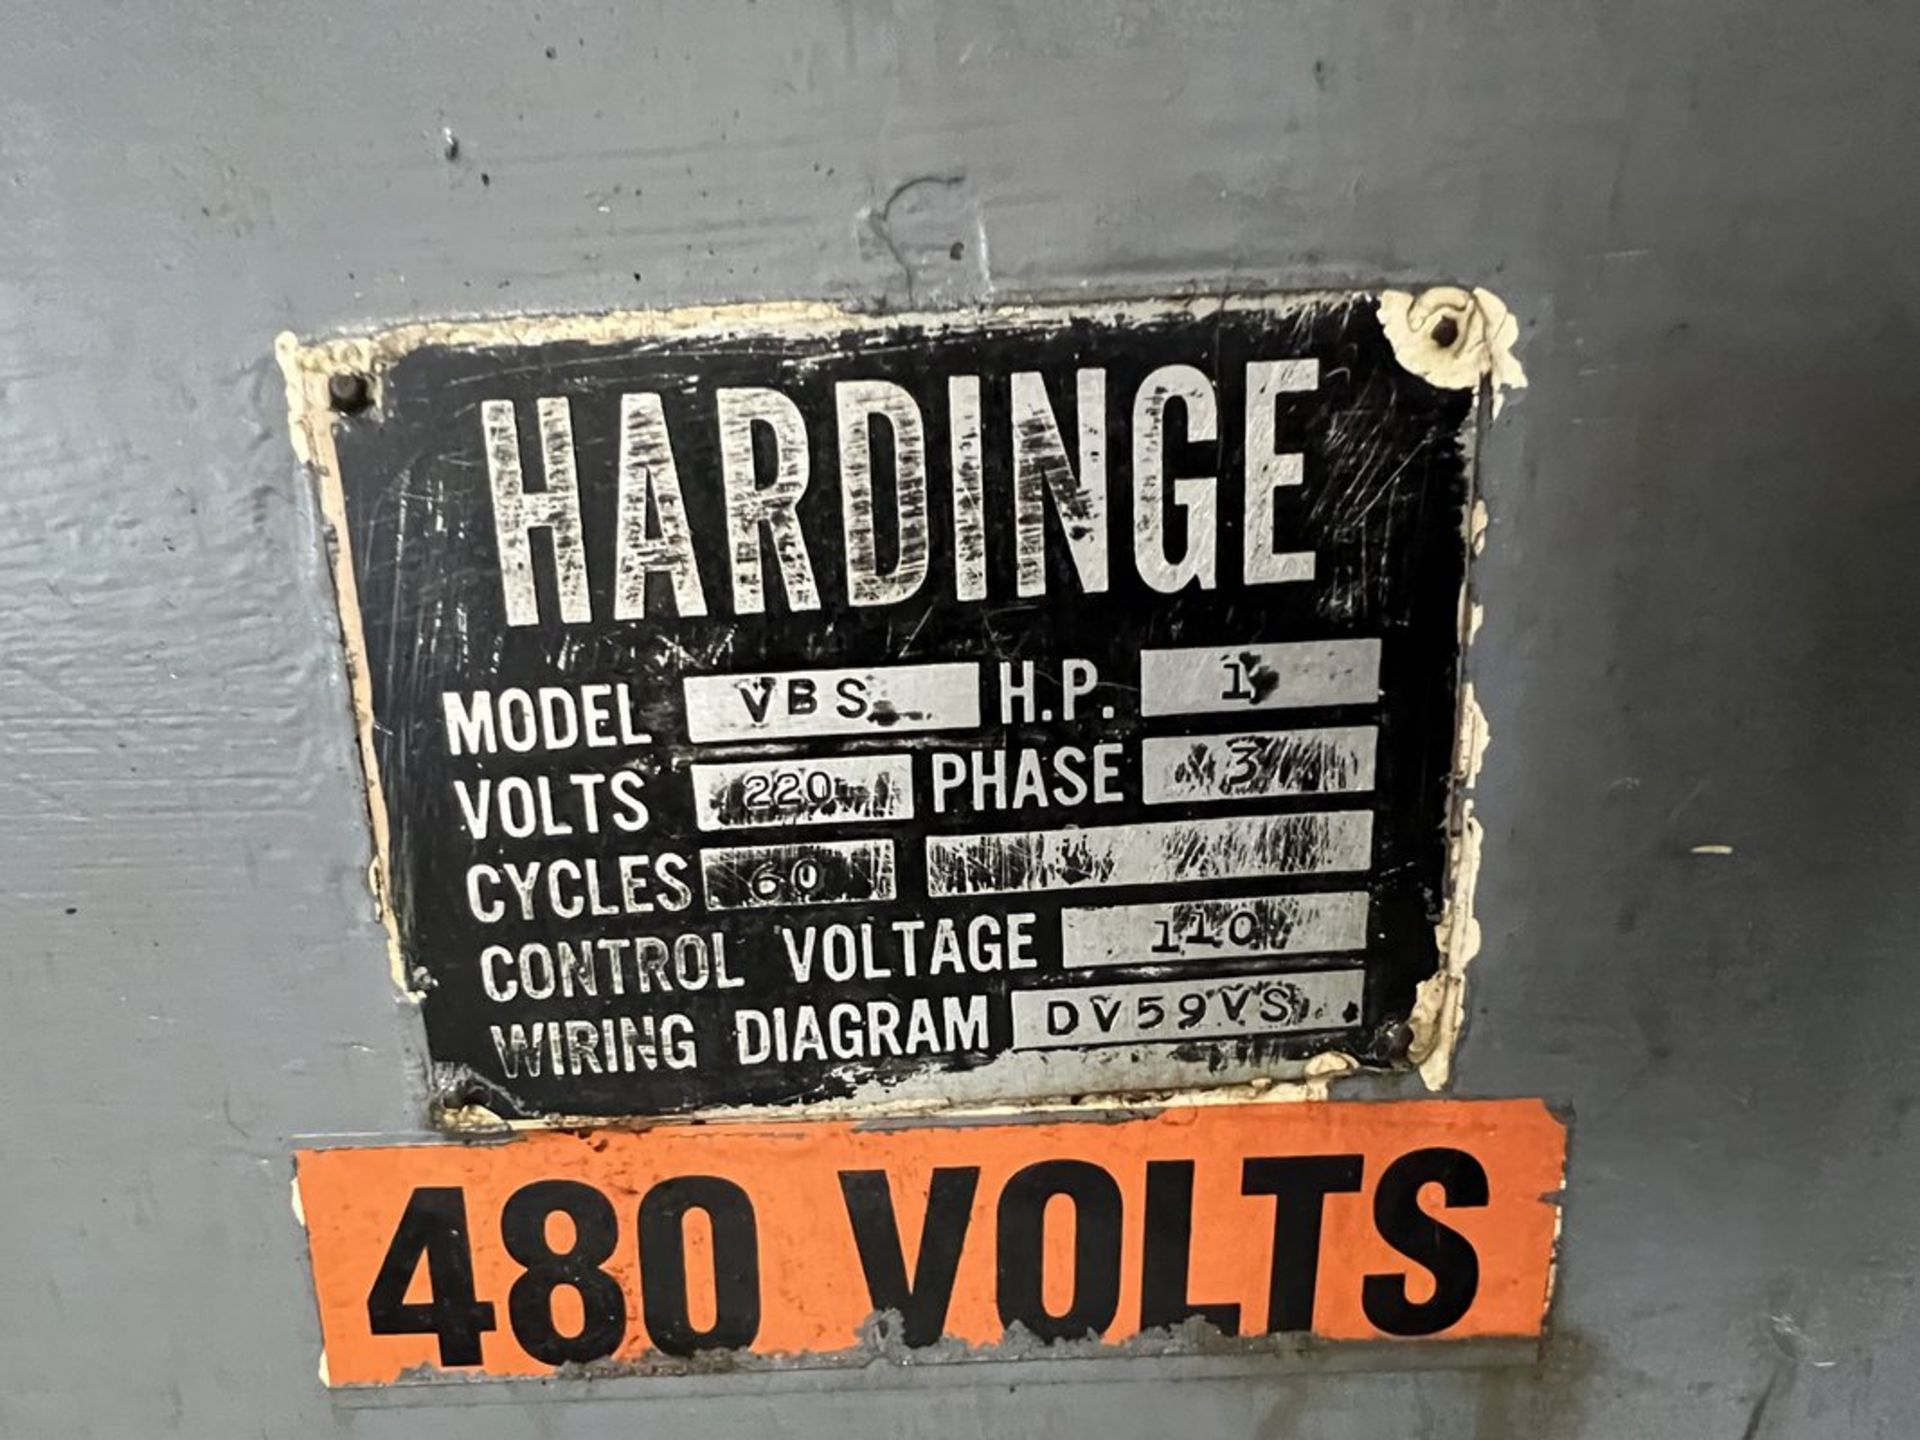 Hardinge DV-59 Turret Tool Room Lathe - Image 8 of 8